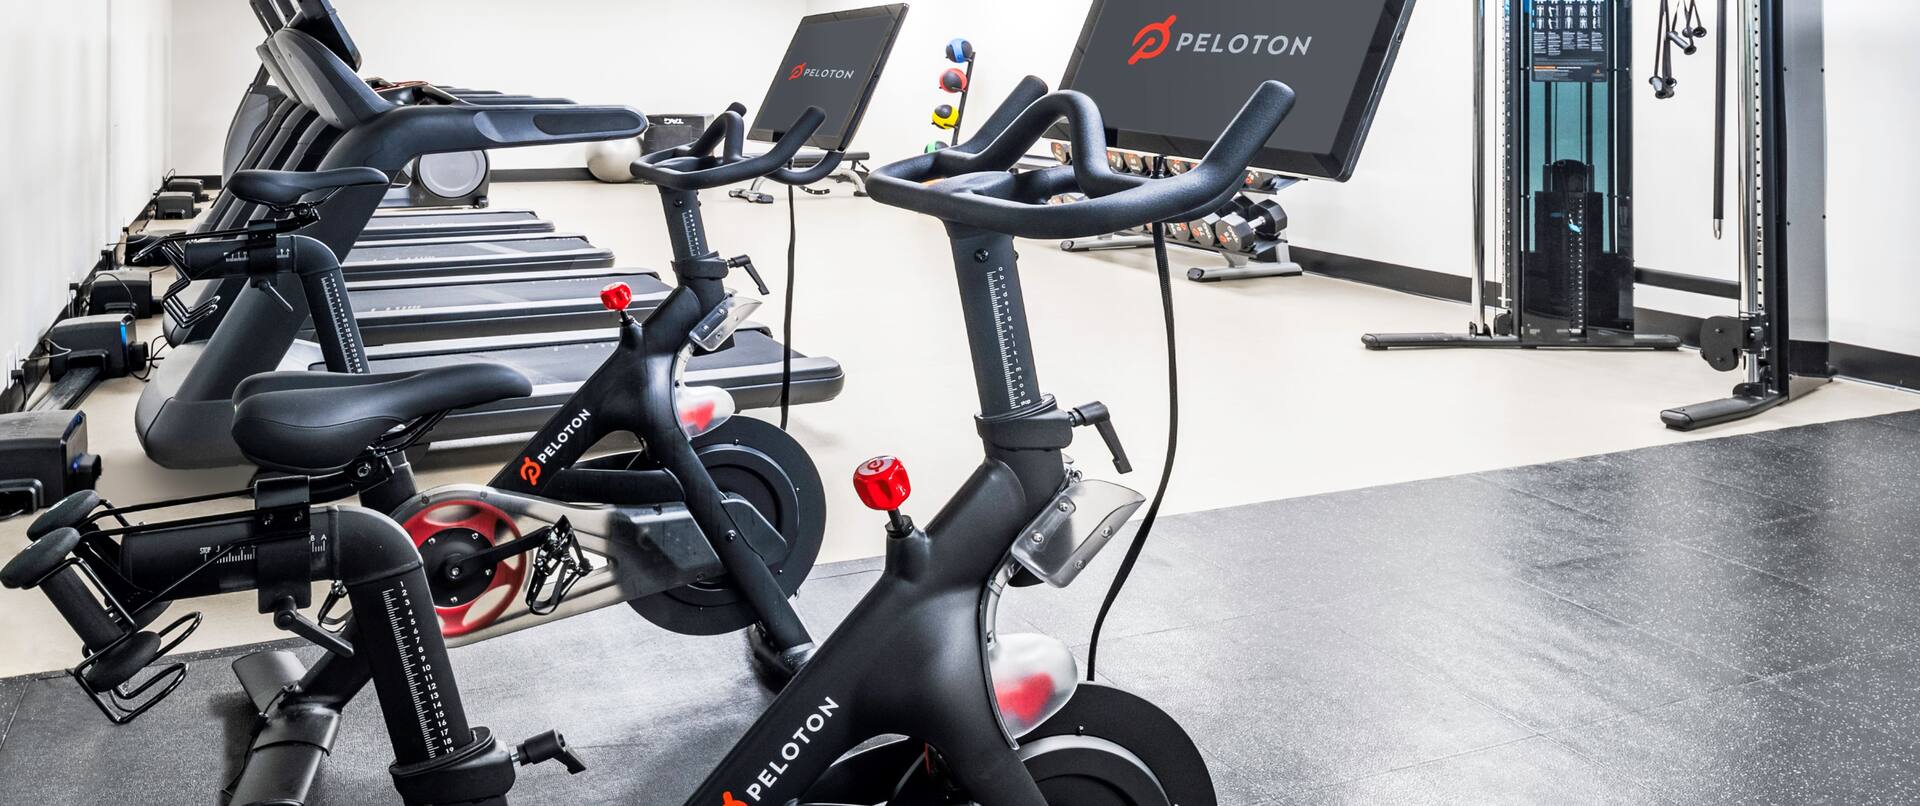 fitness center with peloton bikes